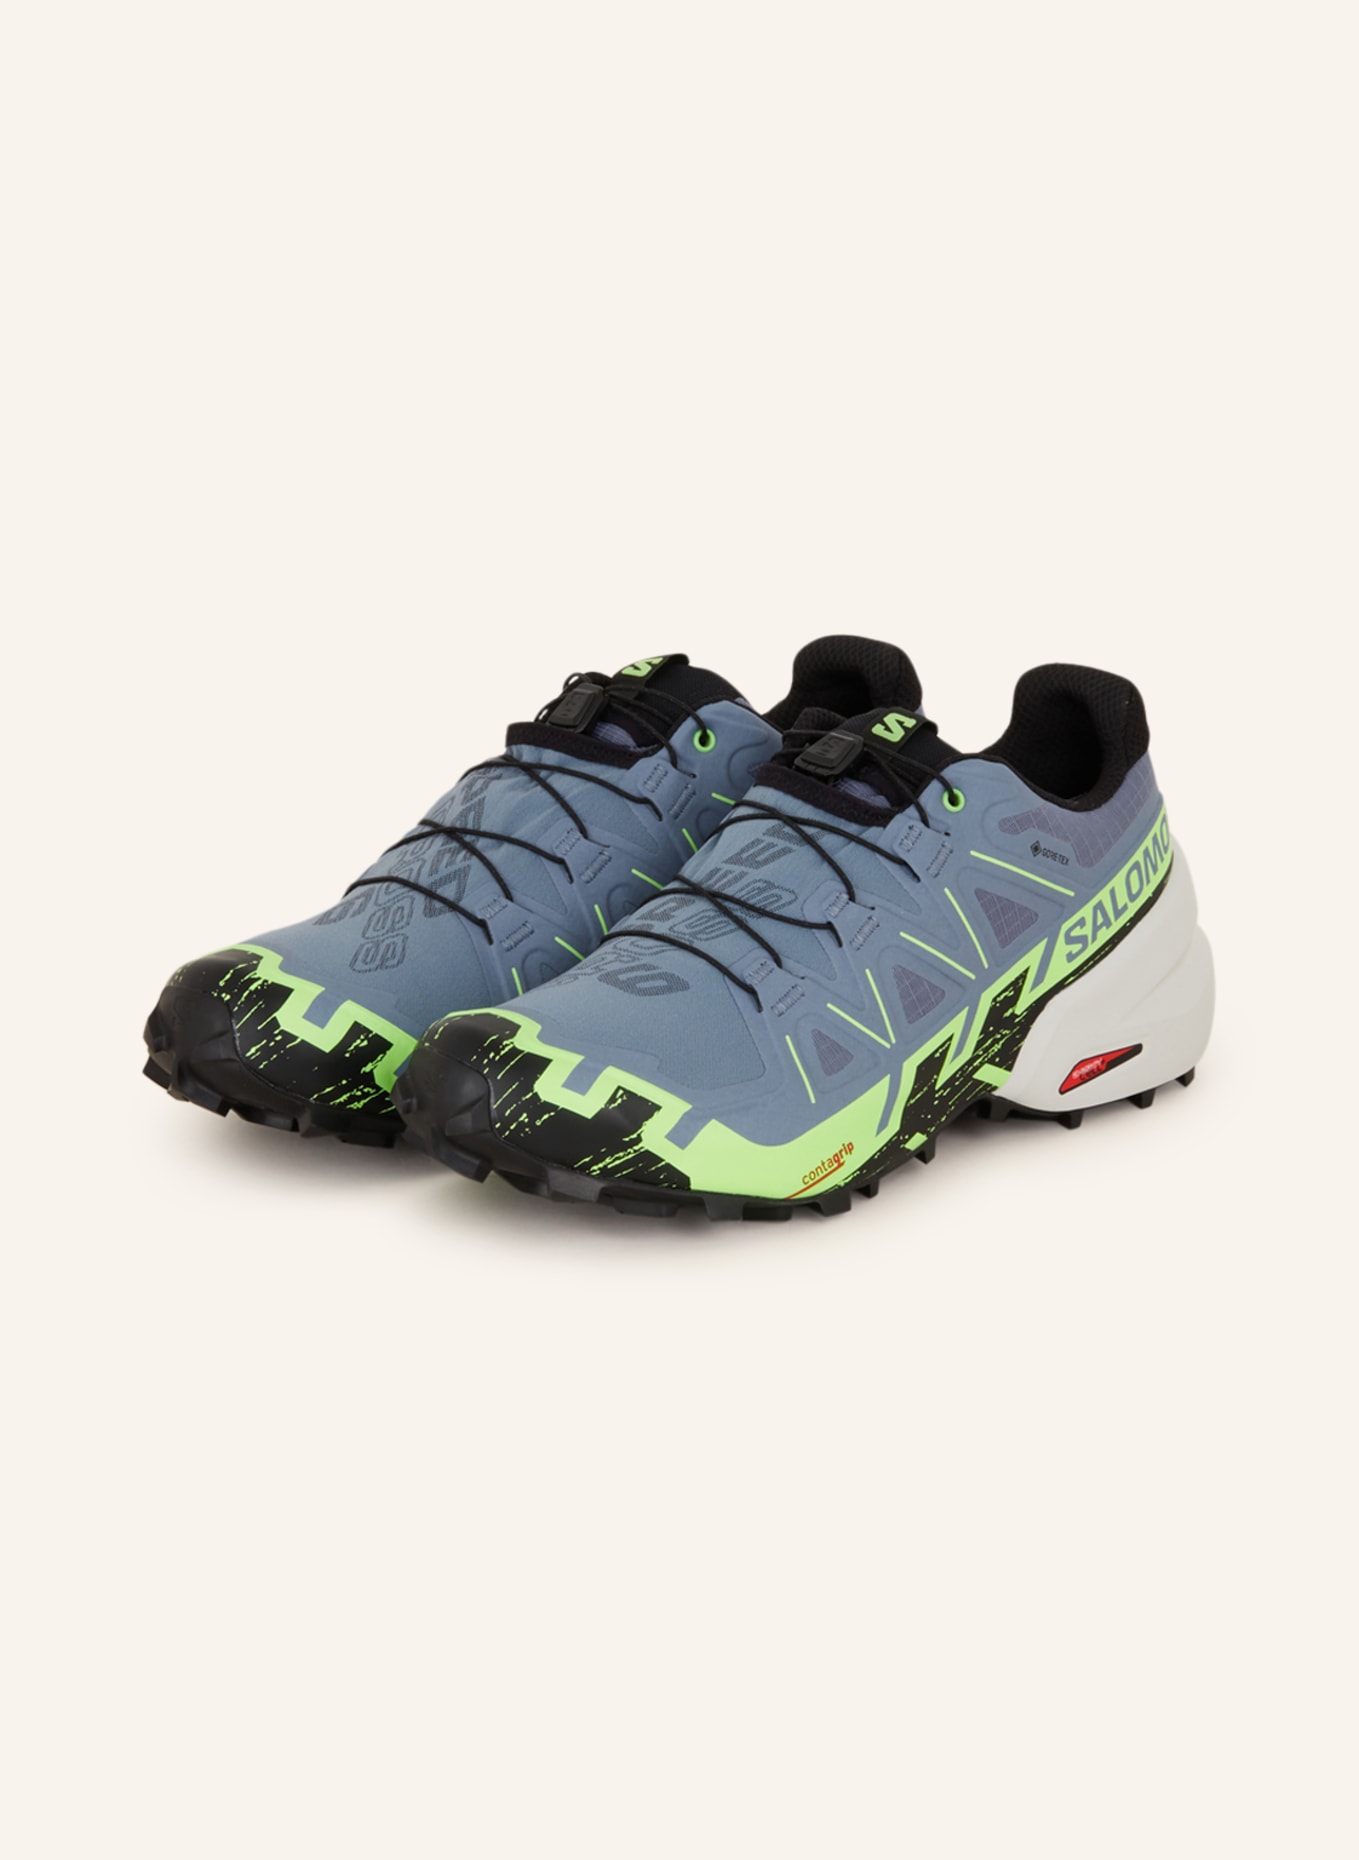 SALOMON Trail running shoes SPEEDCROSS 6 GTX in blue gray/ neon